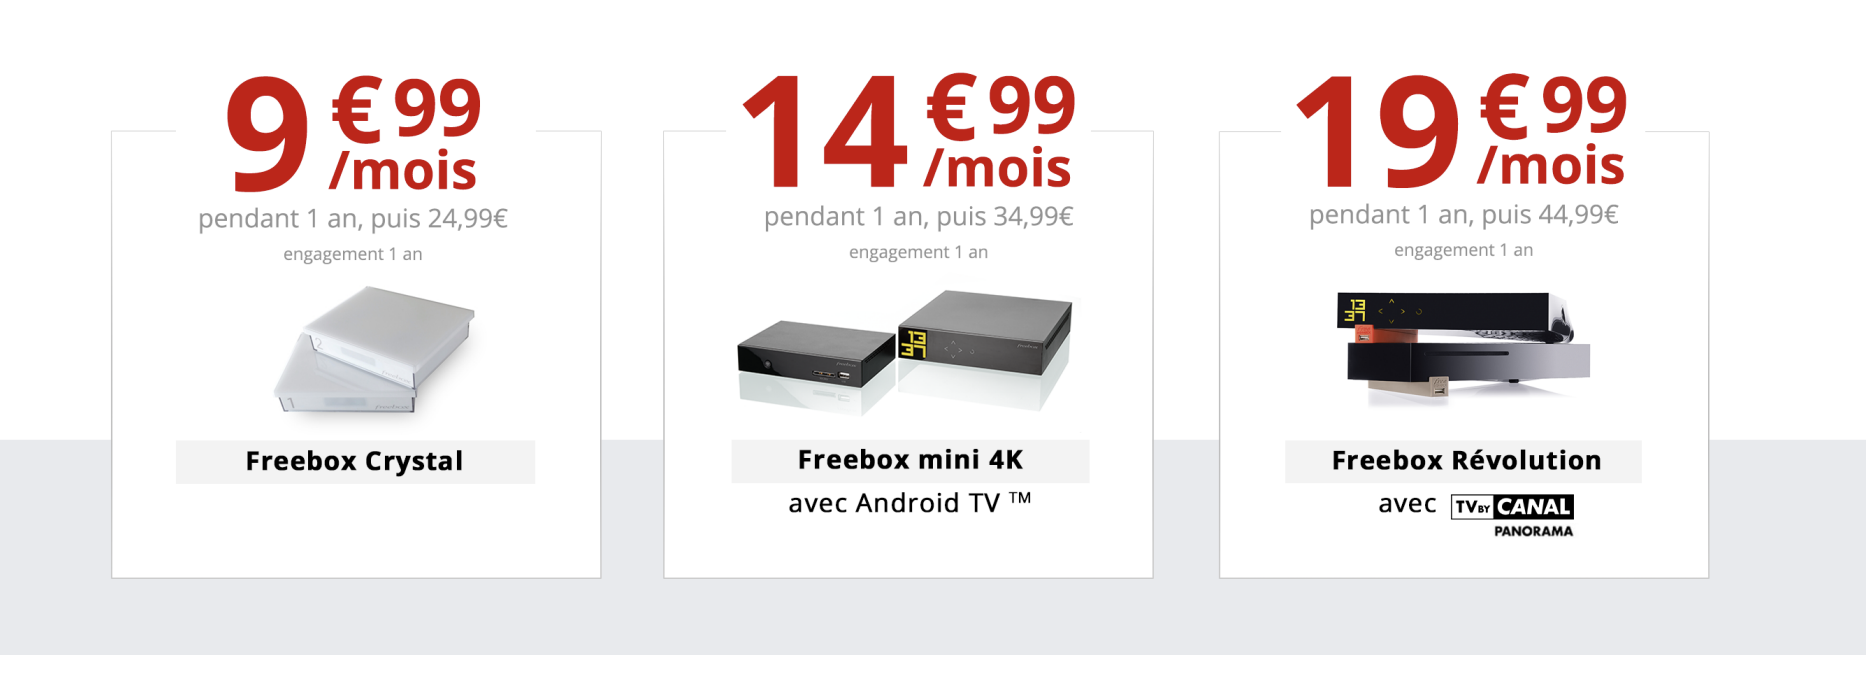 Vente Privée Freebox : internet ADSL à 1,99€/mois